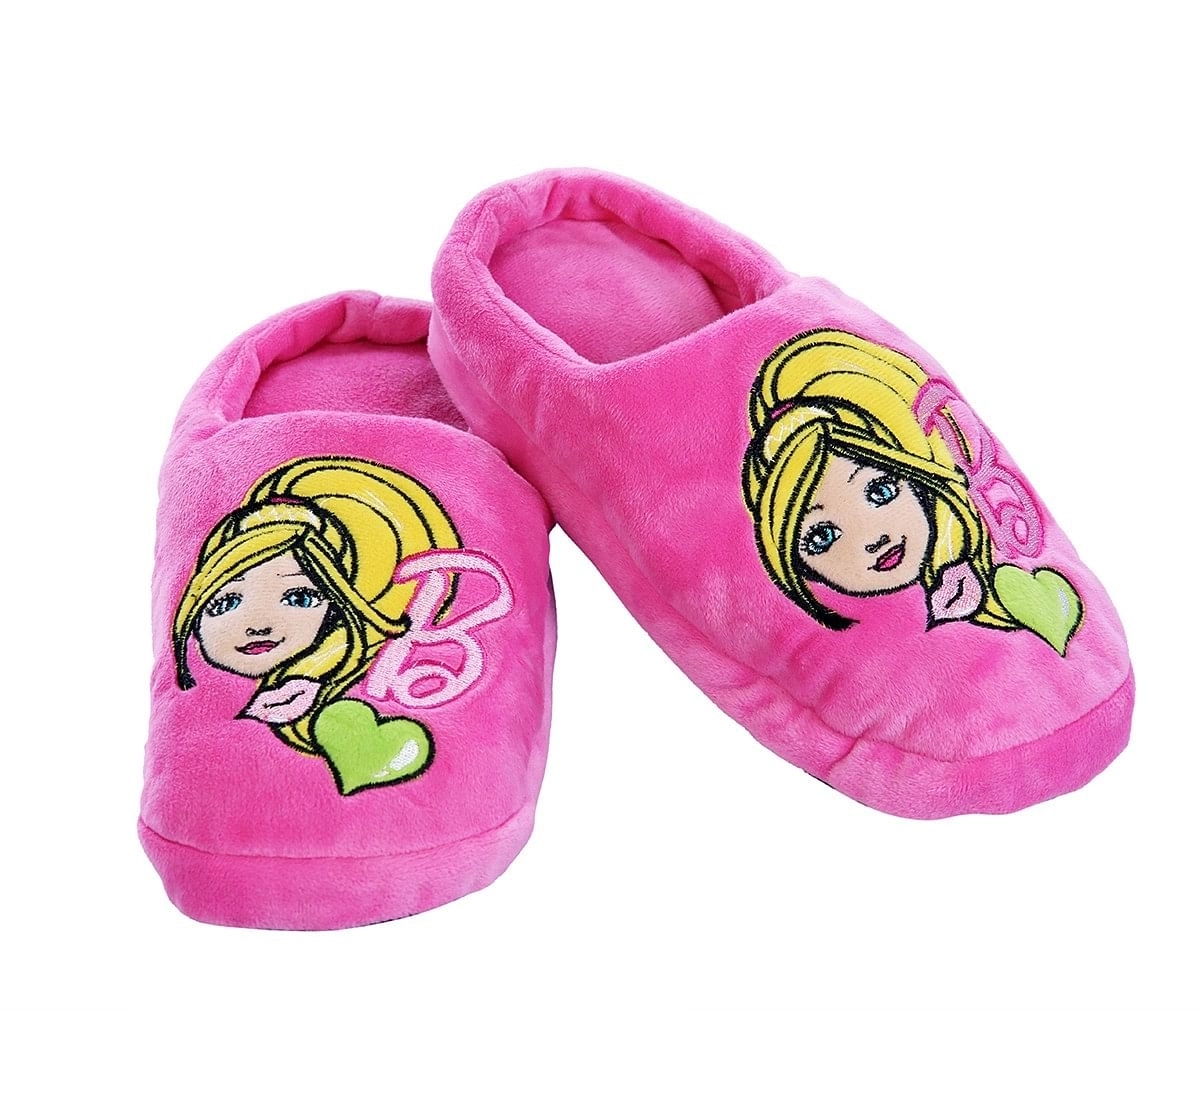 Barbie Soft Buddies Flipflop Medium Plush Accessories for Kids age 12M+ - 7.62 Cm 